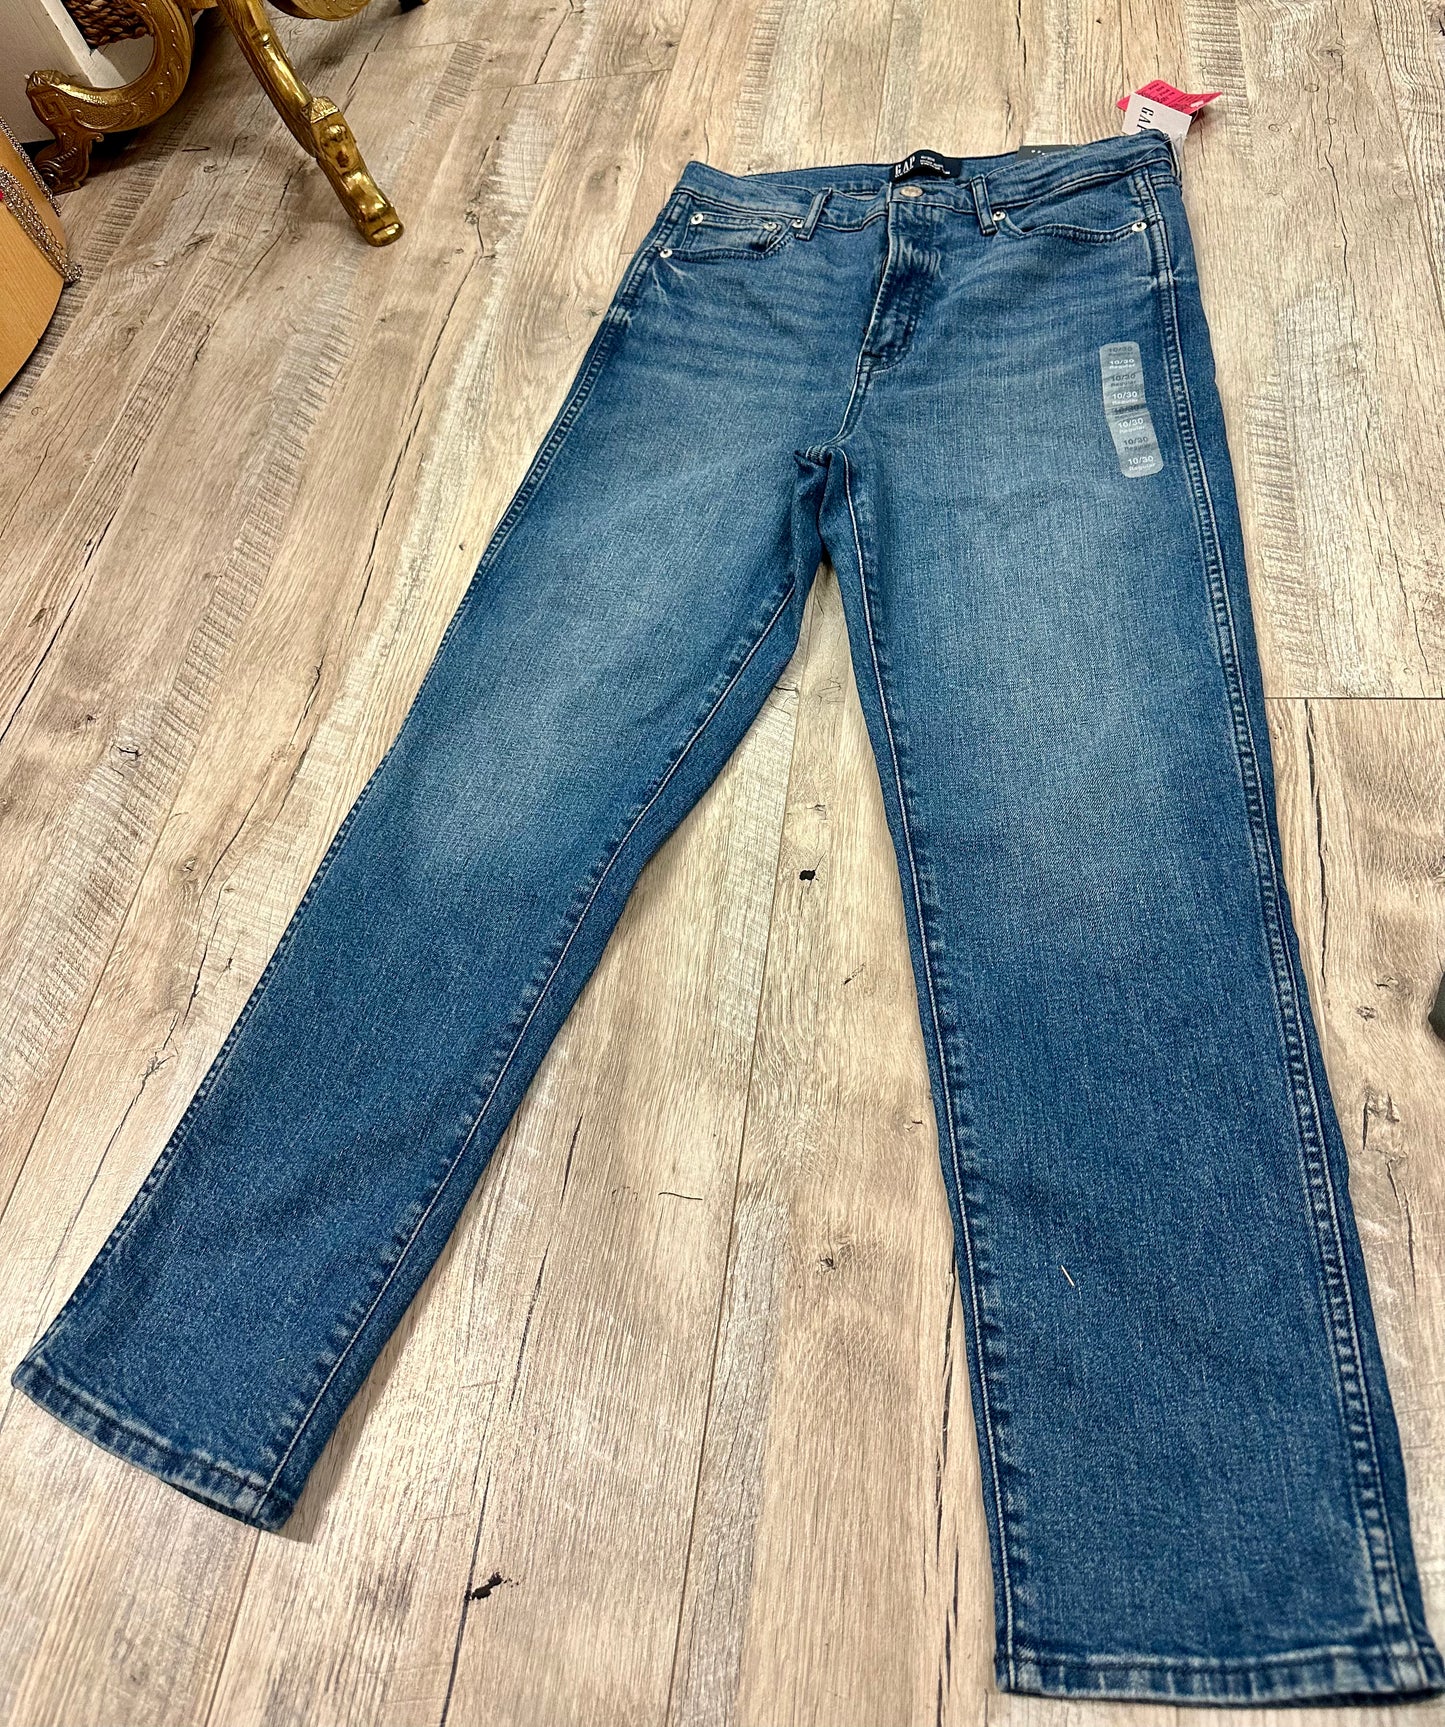 NWT Gap High Rise Vintage Slim Jeans Womens Size 10/ 30 Blue Denim